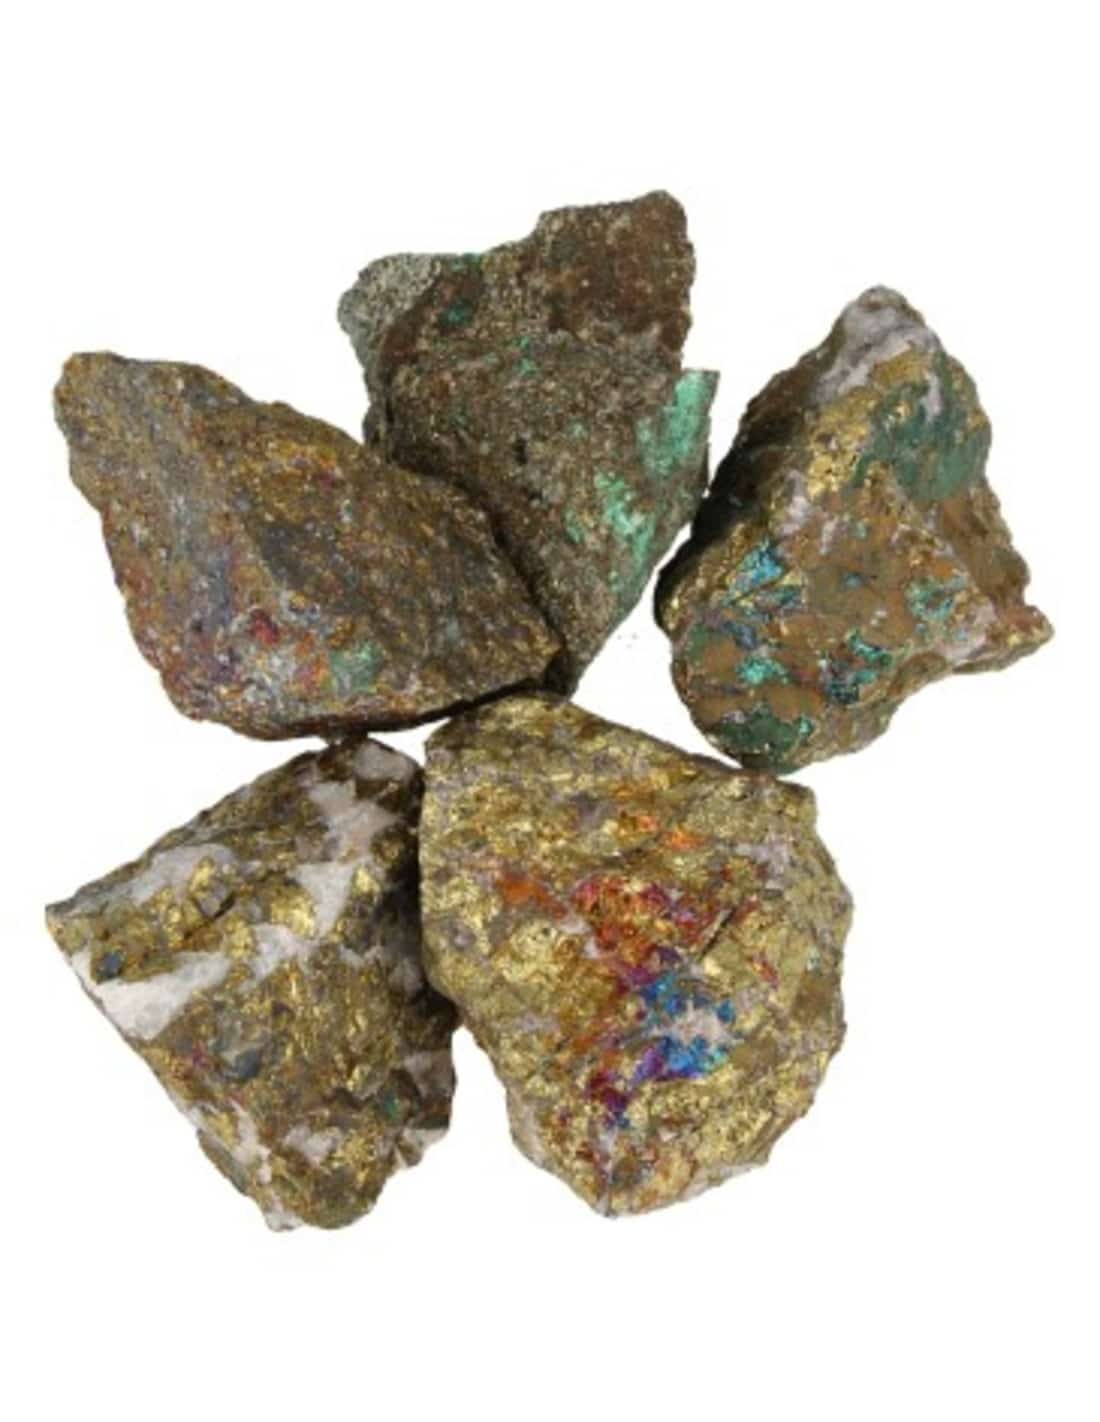 Rough Chalcopyrite Gemstone Chunks (500 grams)